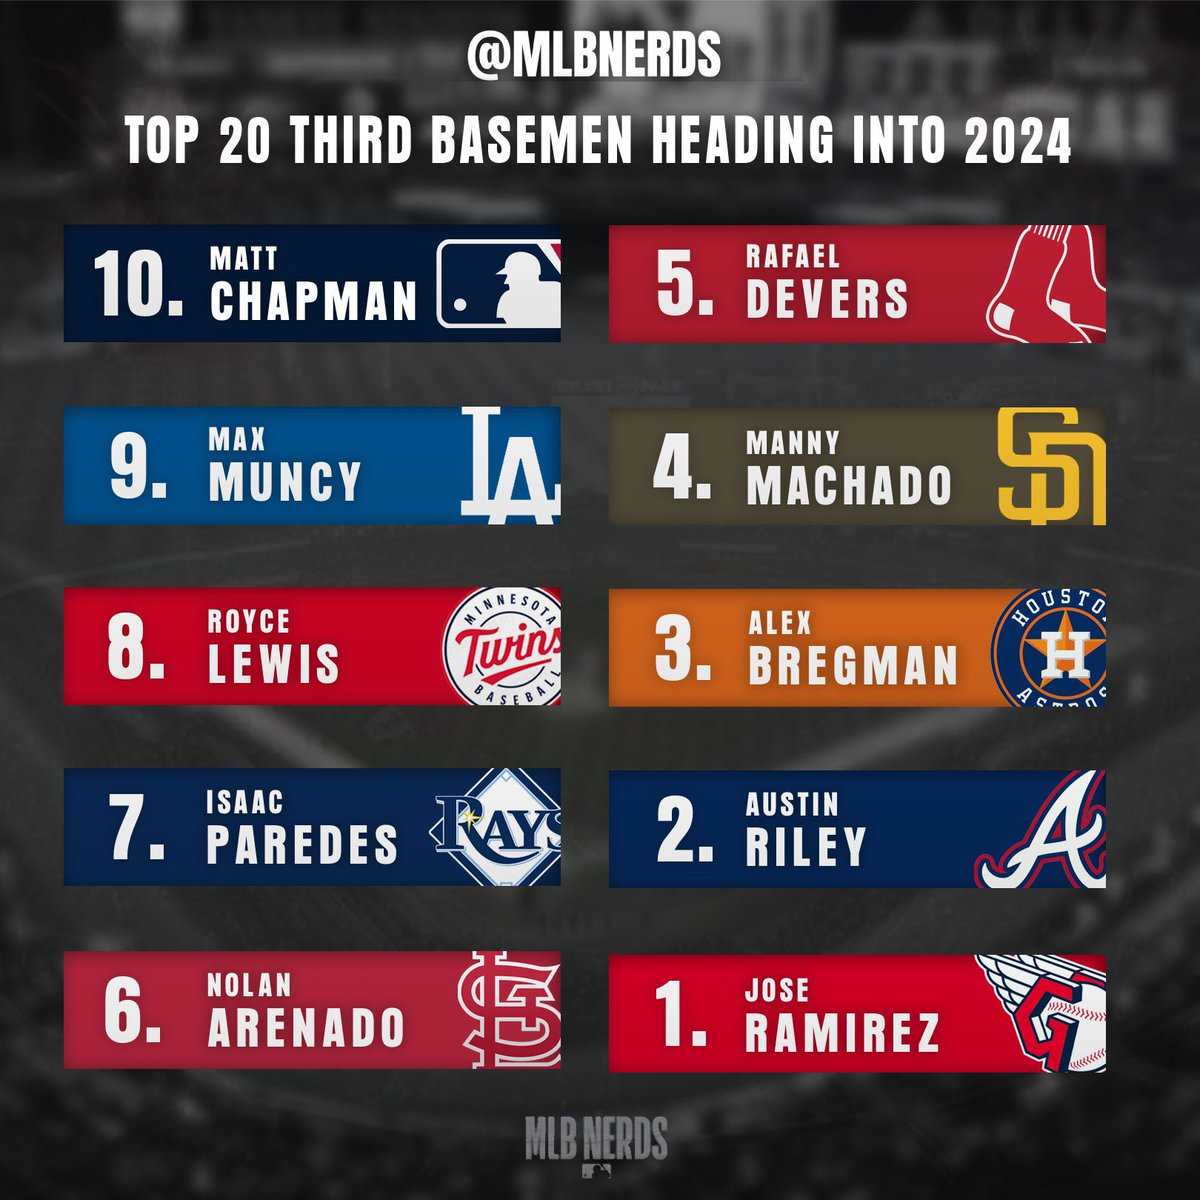 Top 10 Third Basemen for the 2024 season.